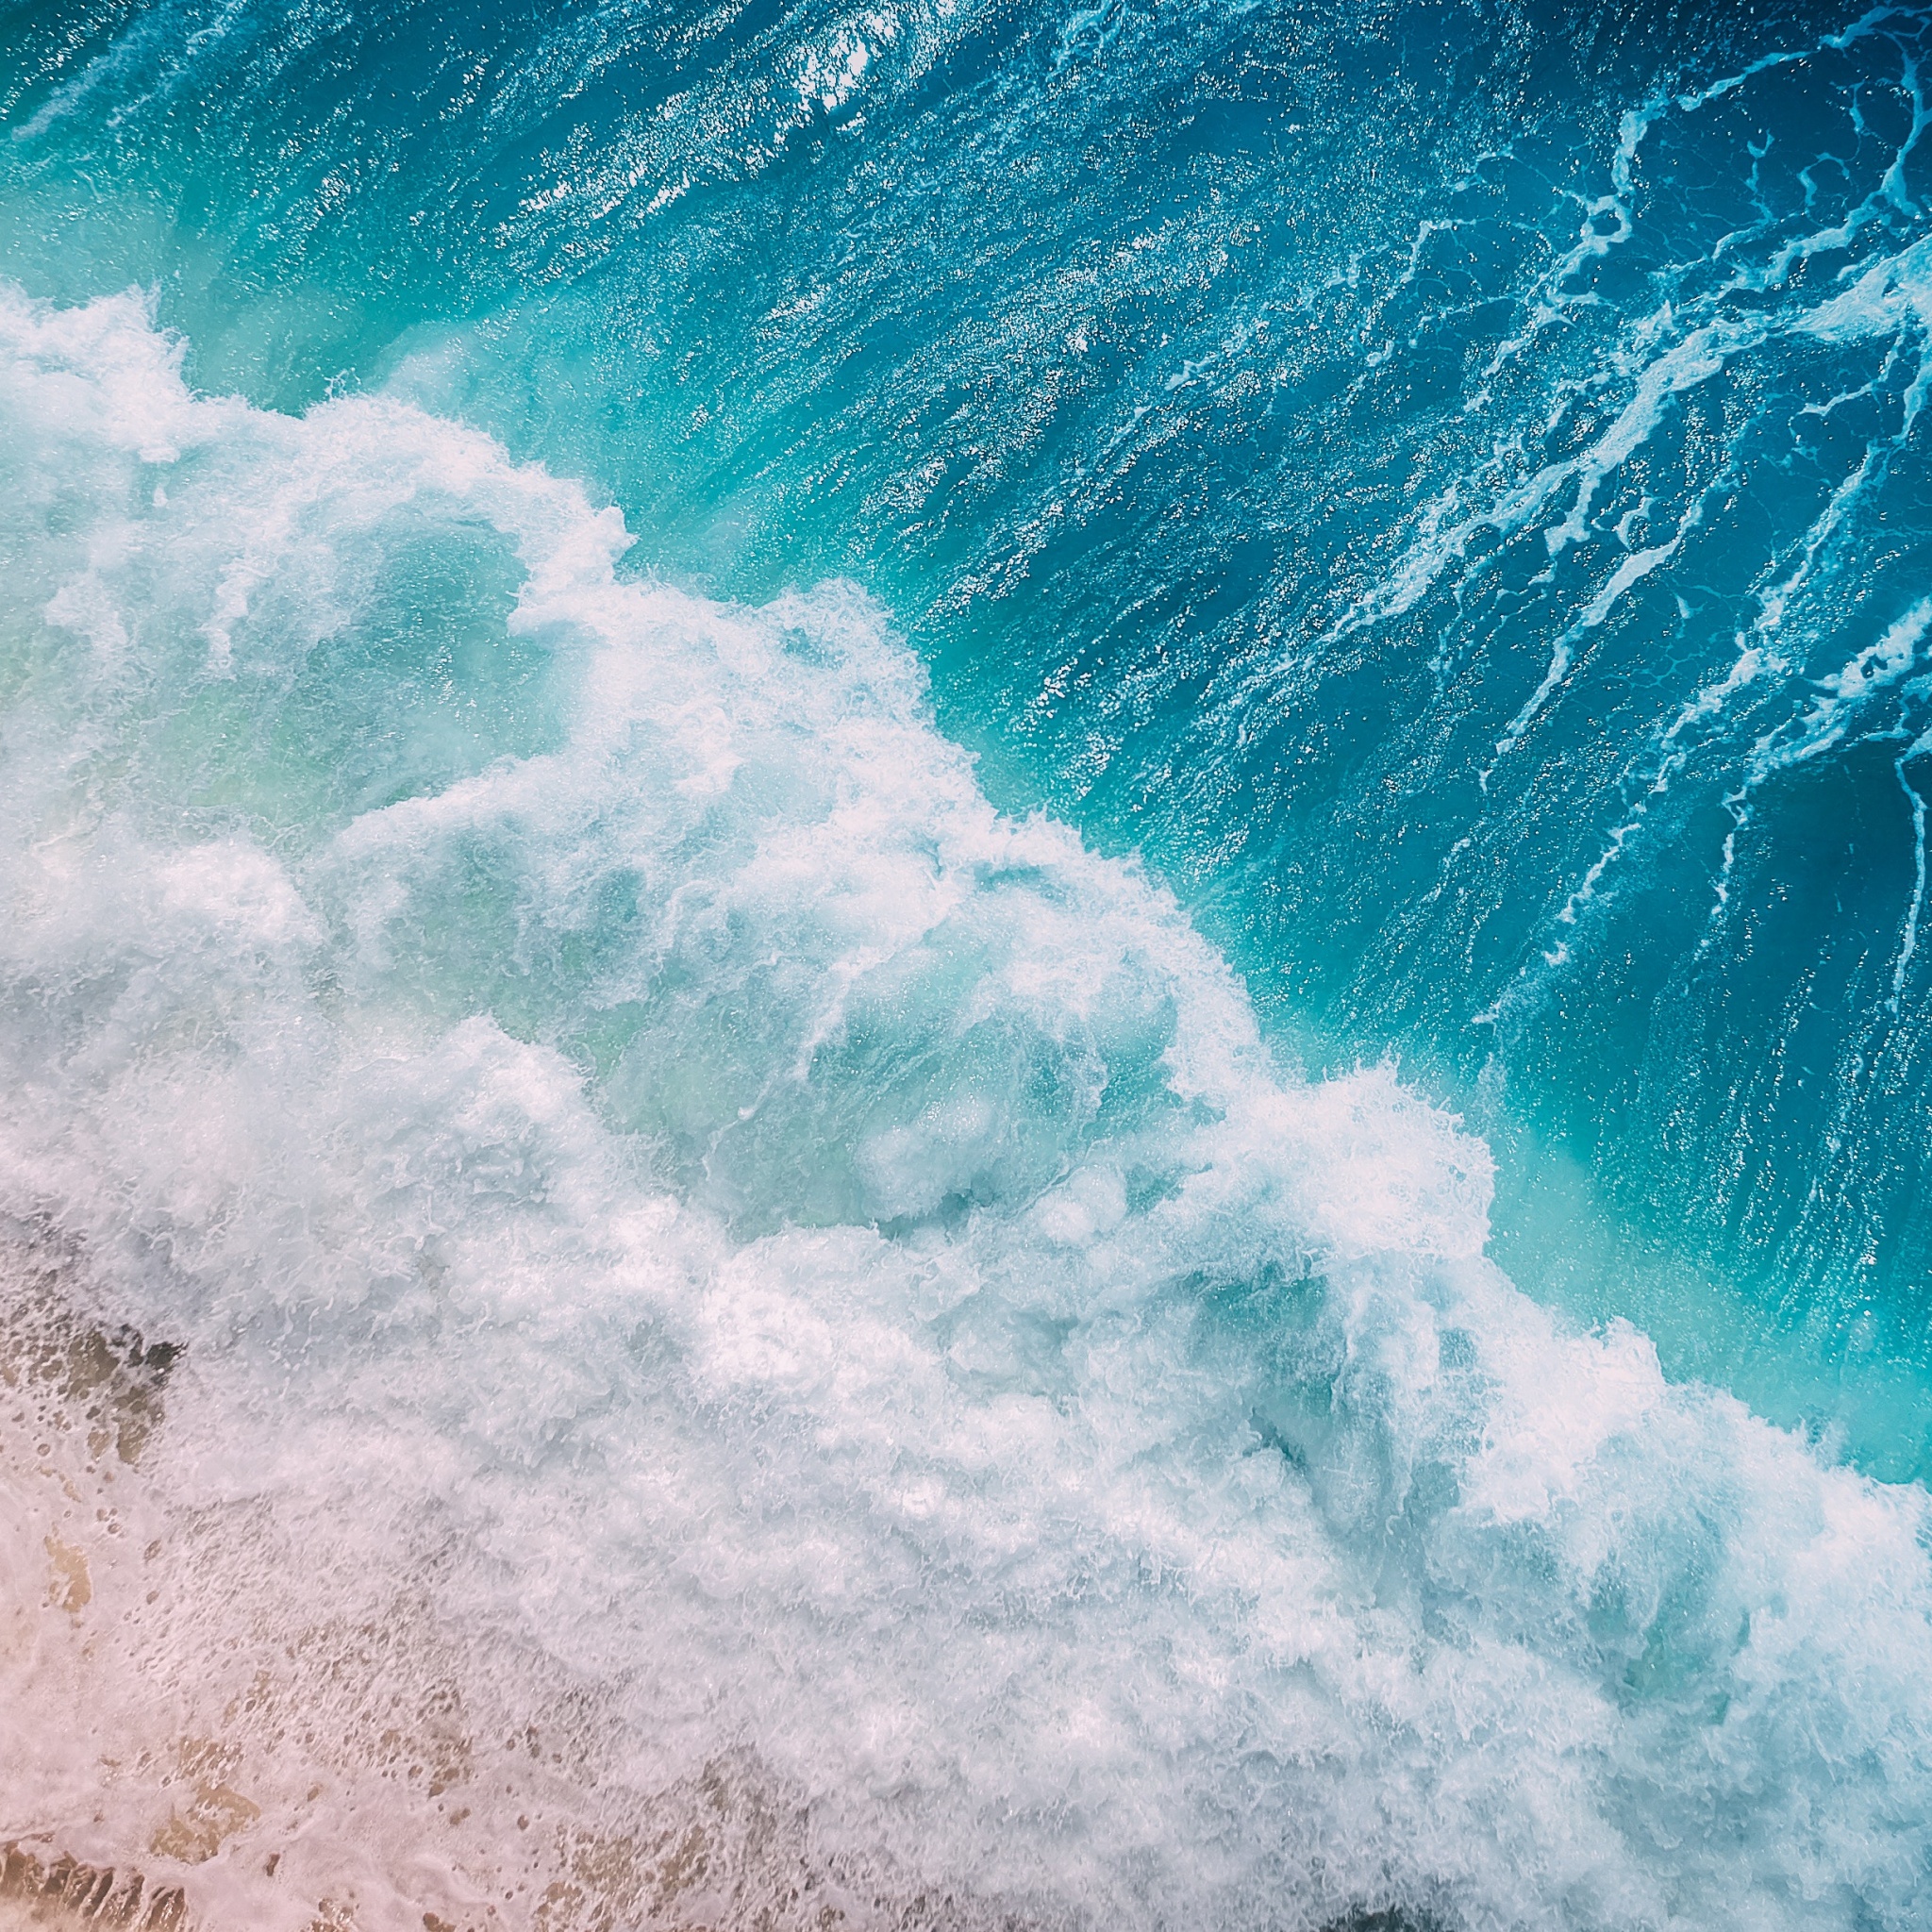 Ocean Images  Free HD Backgrounds PNGs Vectors  Templates  rawpixel